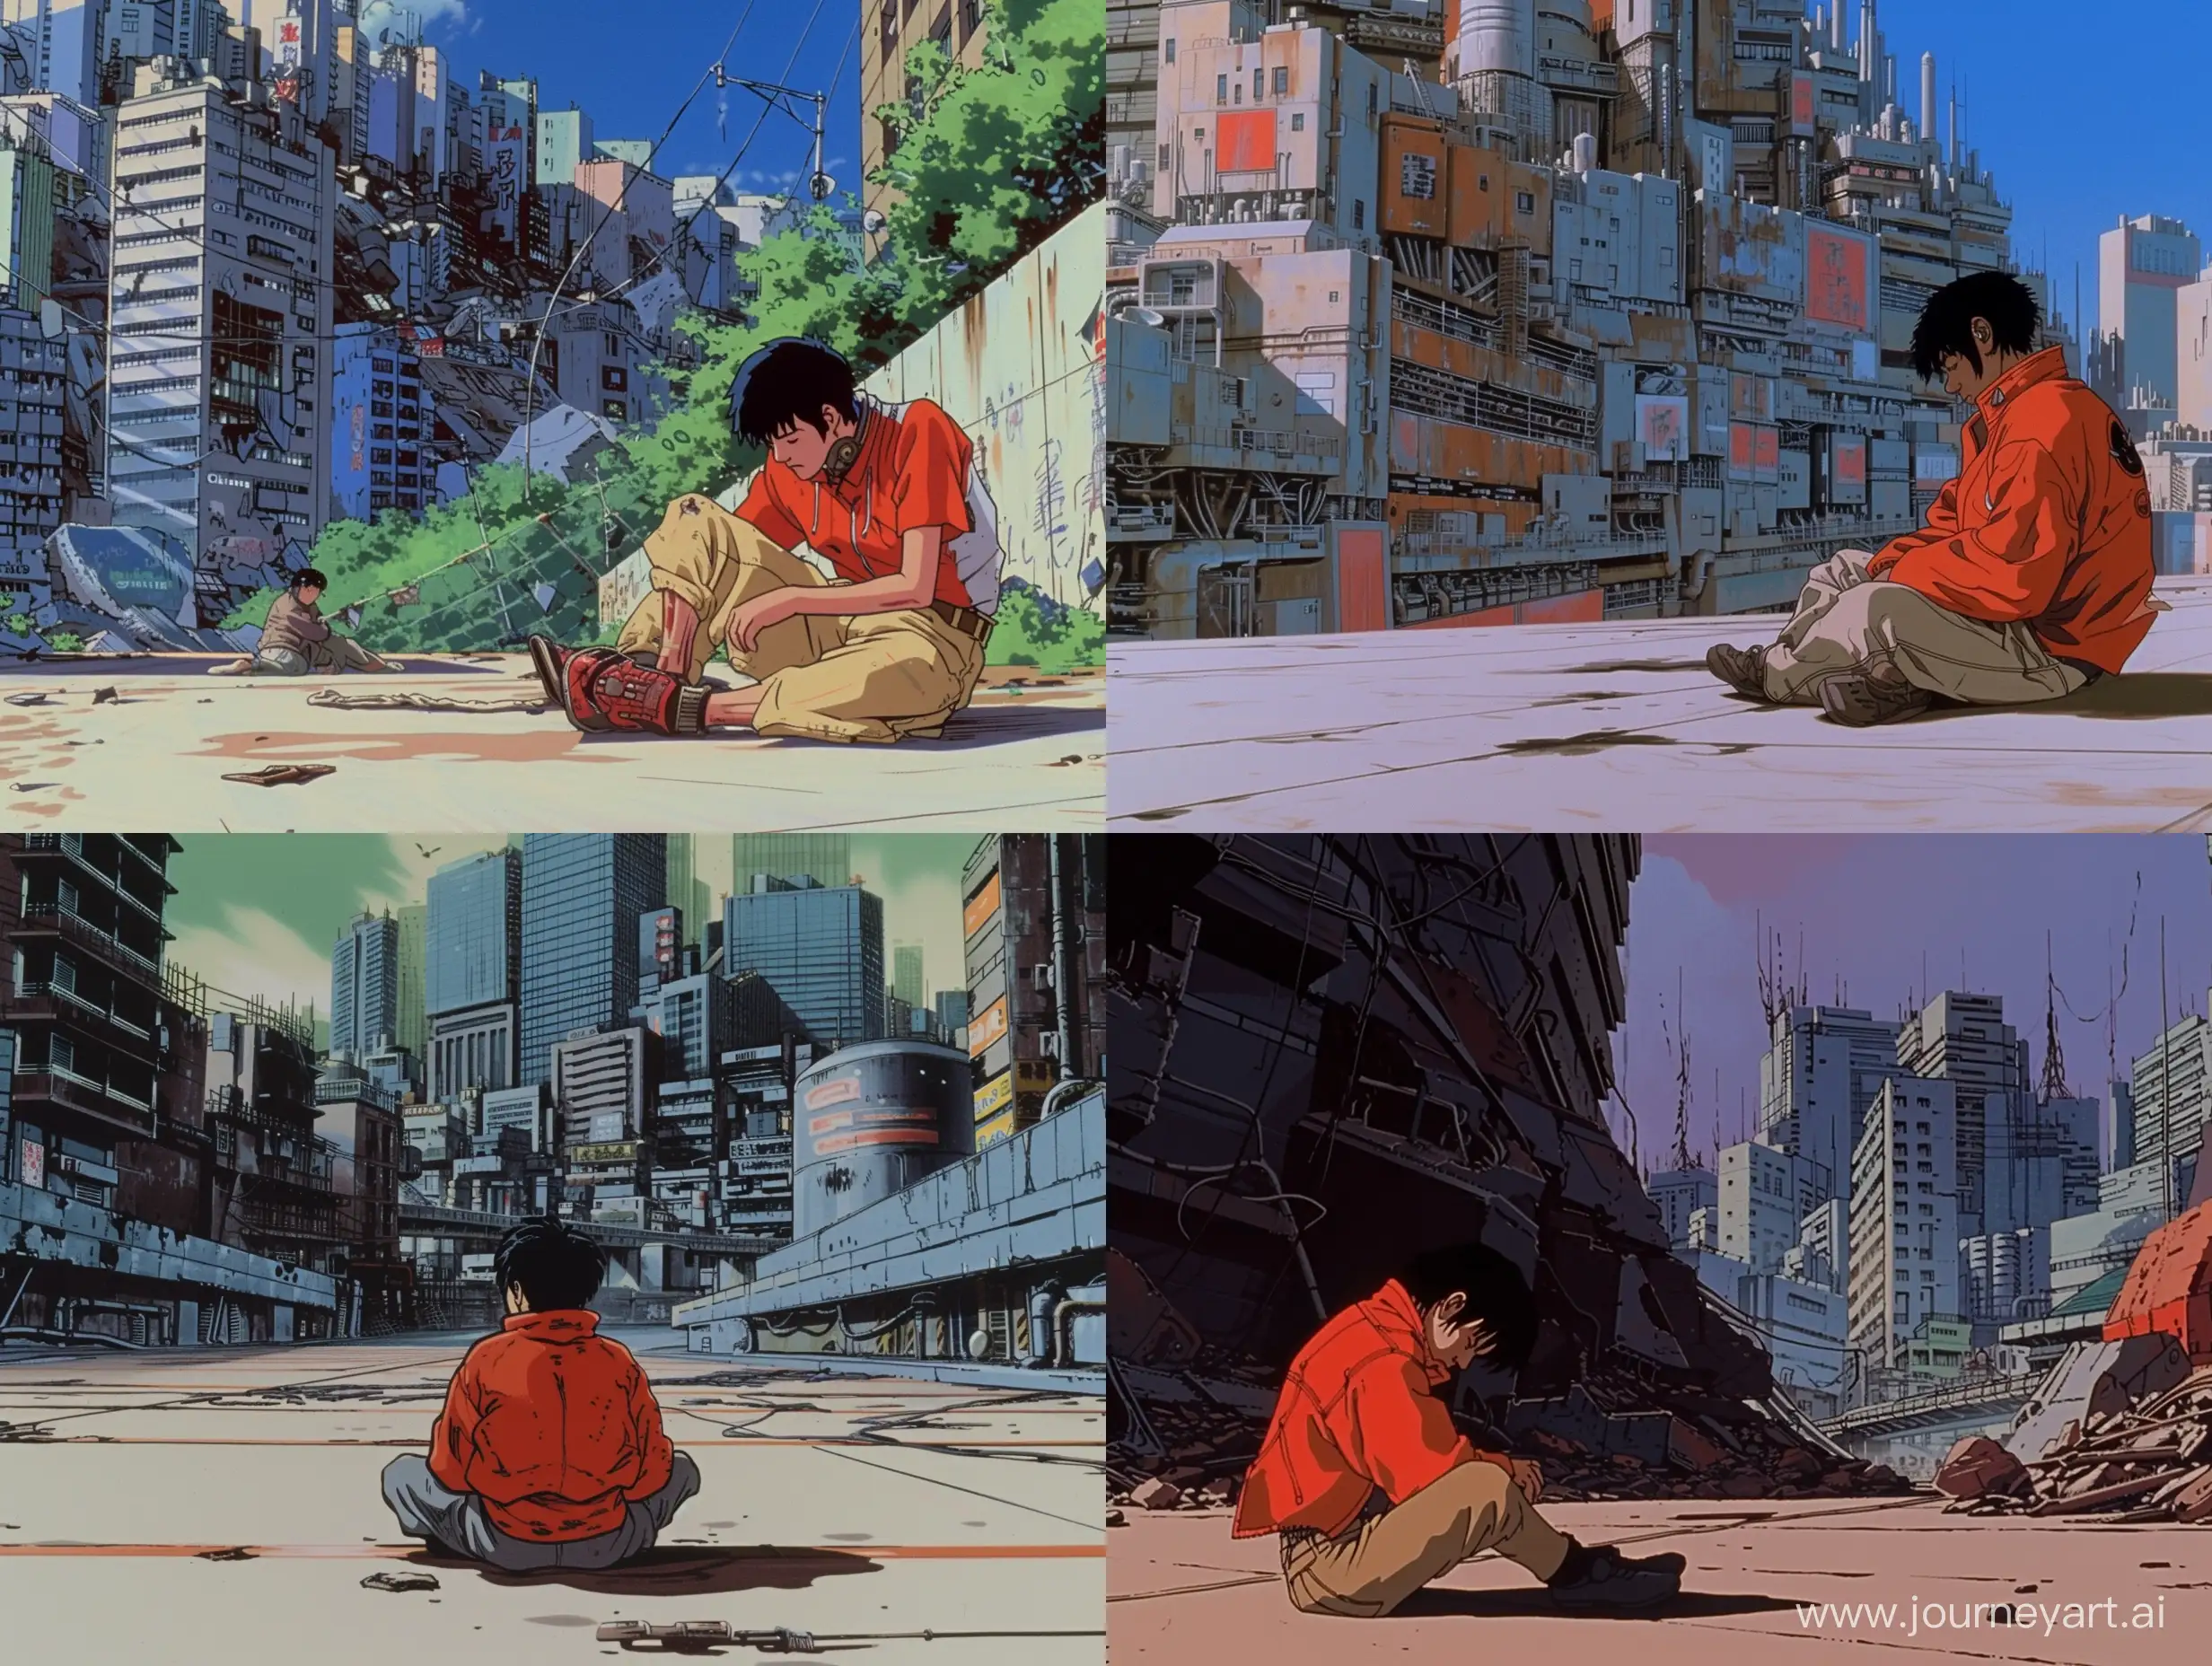 Nostalgic-Cyberpunk-Scene-90s-Anime-Vibes-with-Cyberpunk-Man-in-Futuristic-City